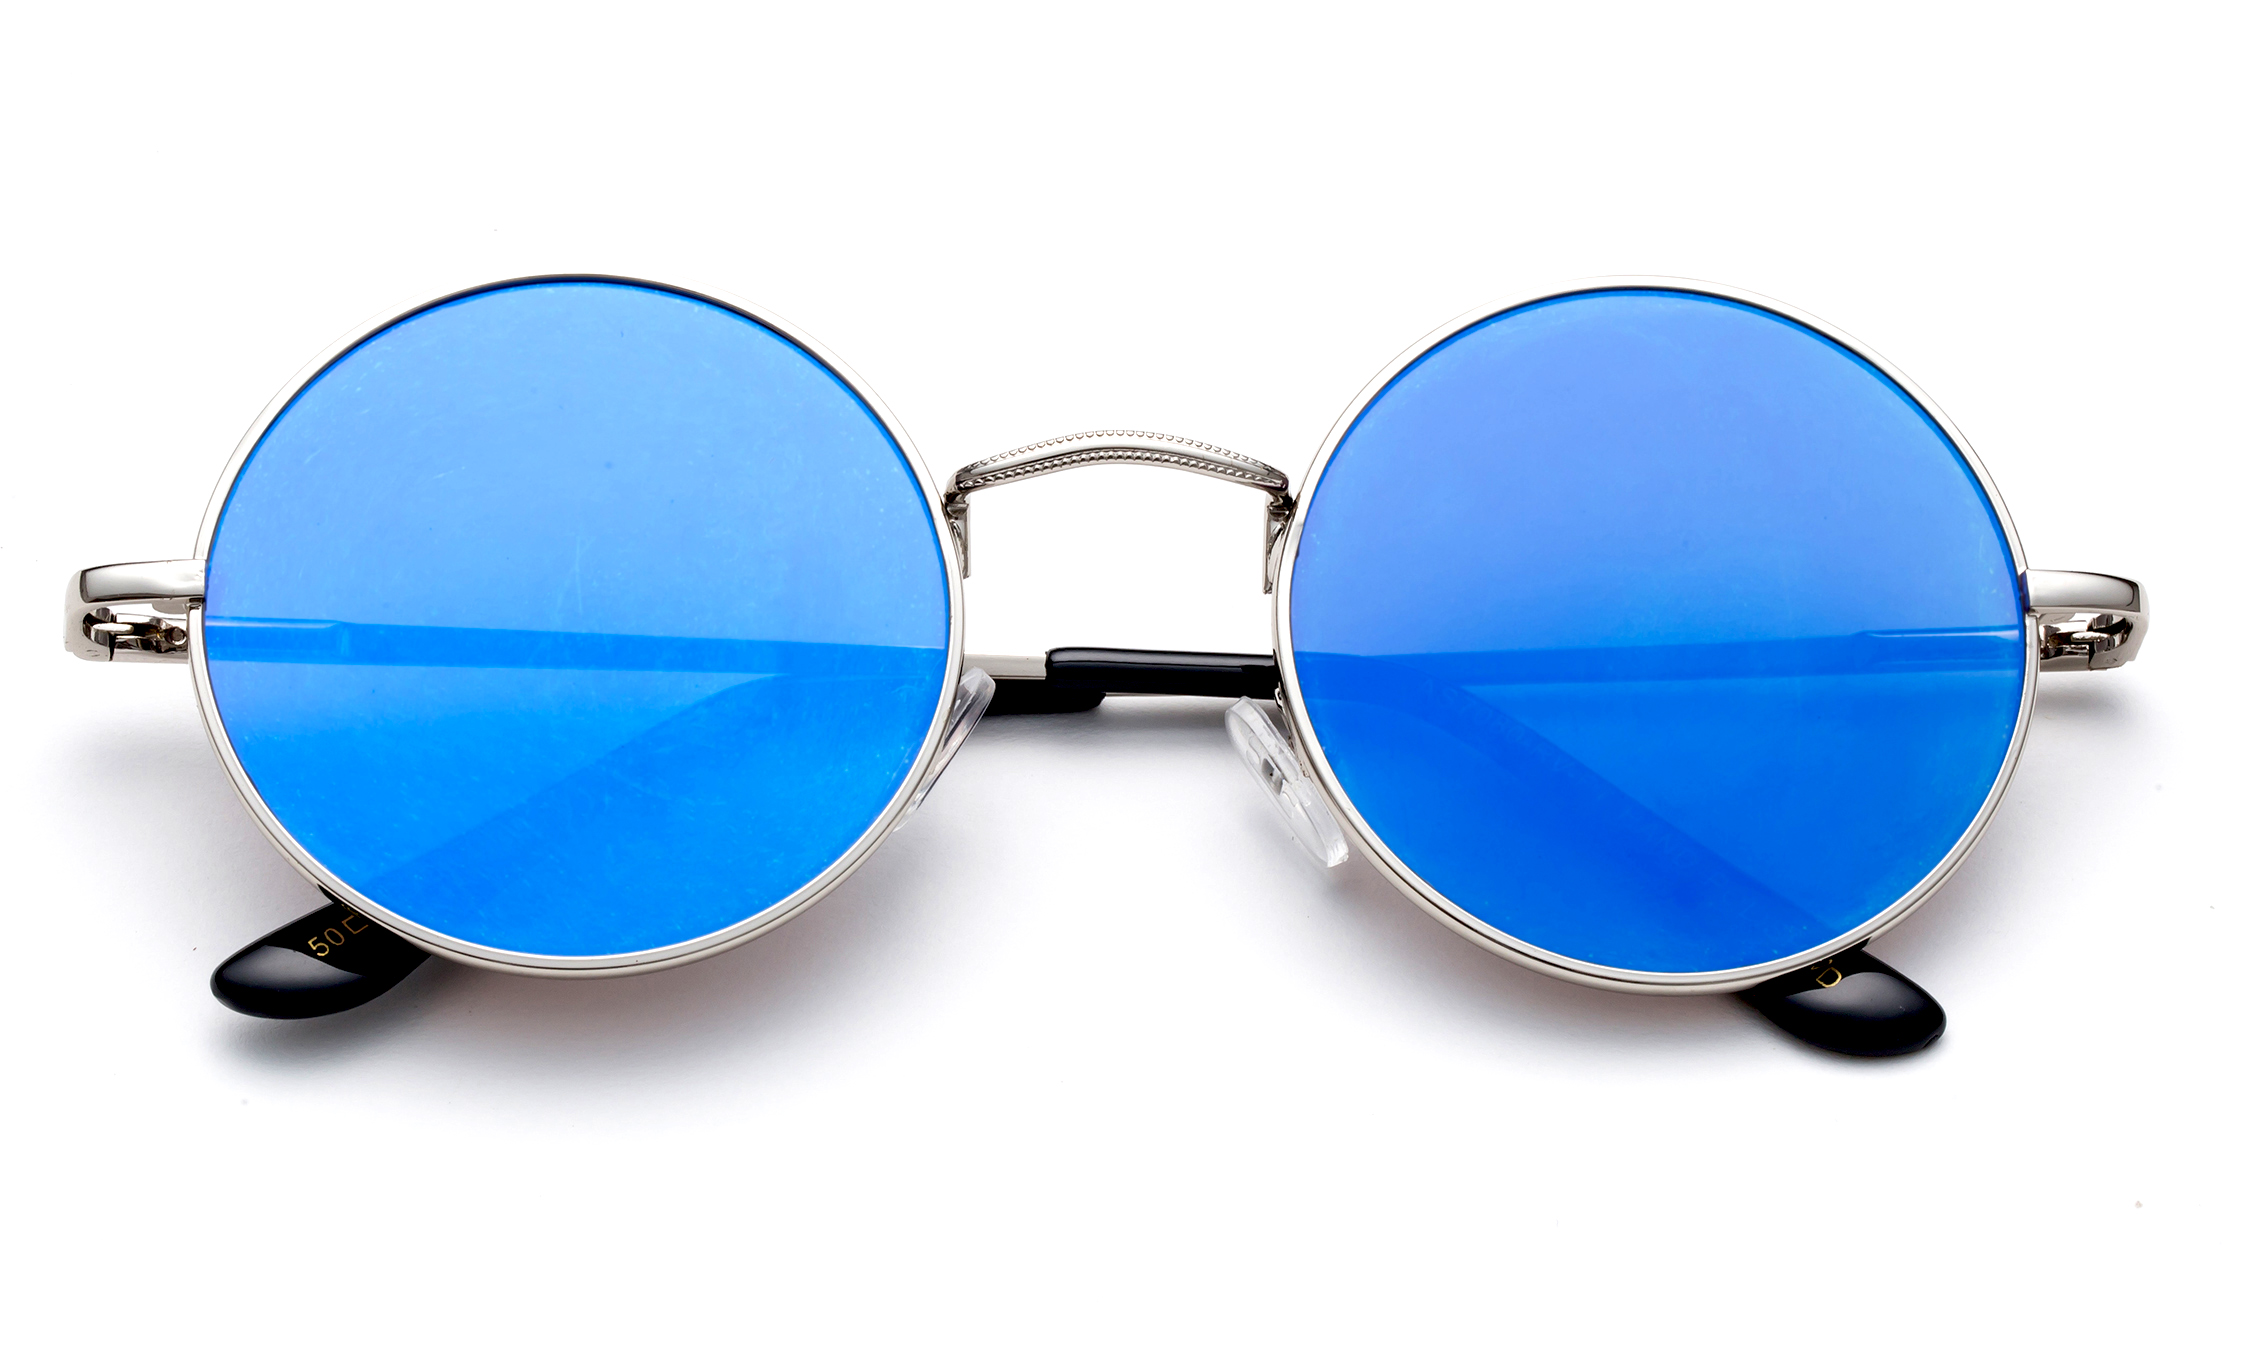 Newbee Fashion Steam Punk Metal Classic Round John Lennon Inspired Flash Mirrored Flat Lenses Hippy 60's Sunglasses Retro - image 2 of 2